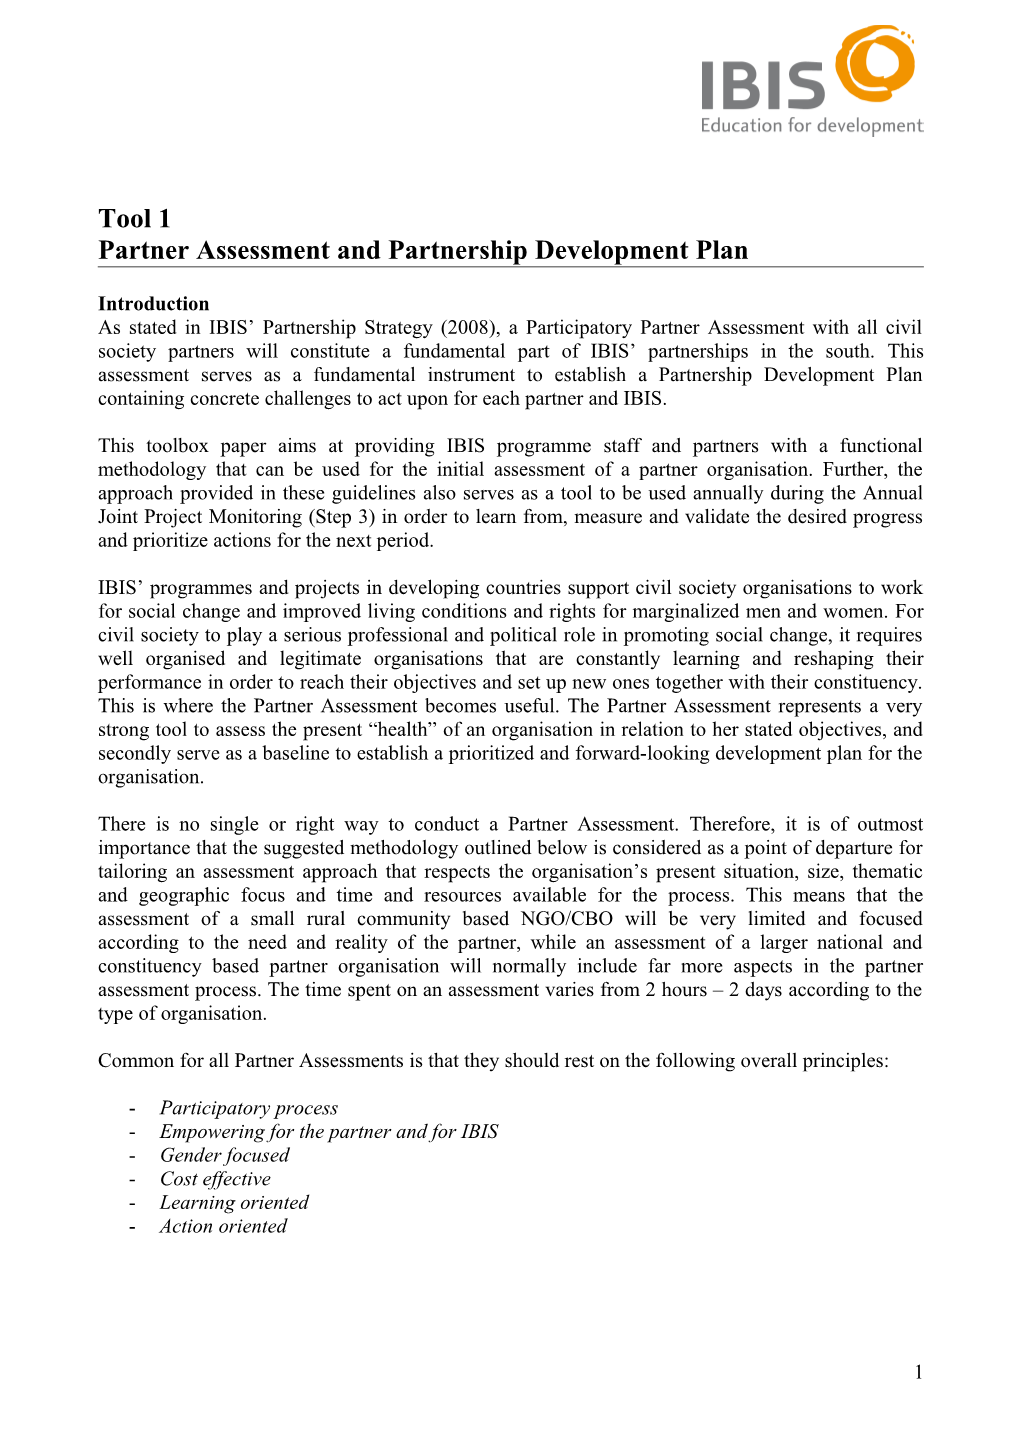 Partner Assessment and Partnership Development Plan